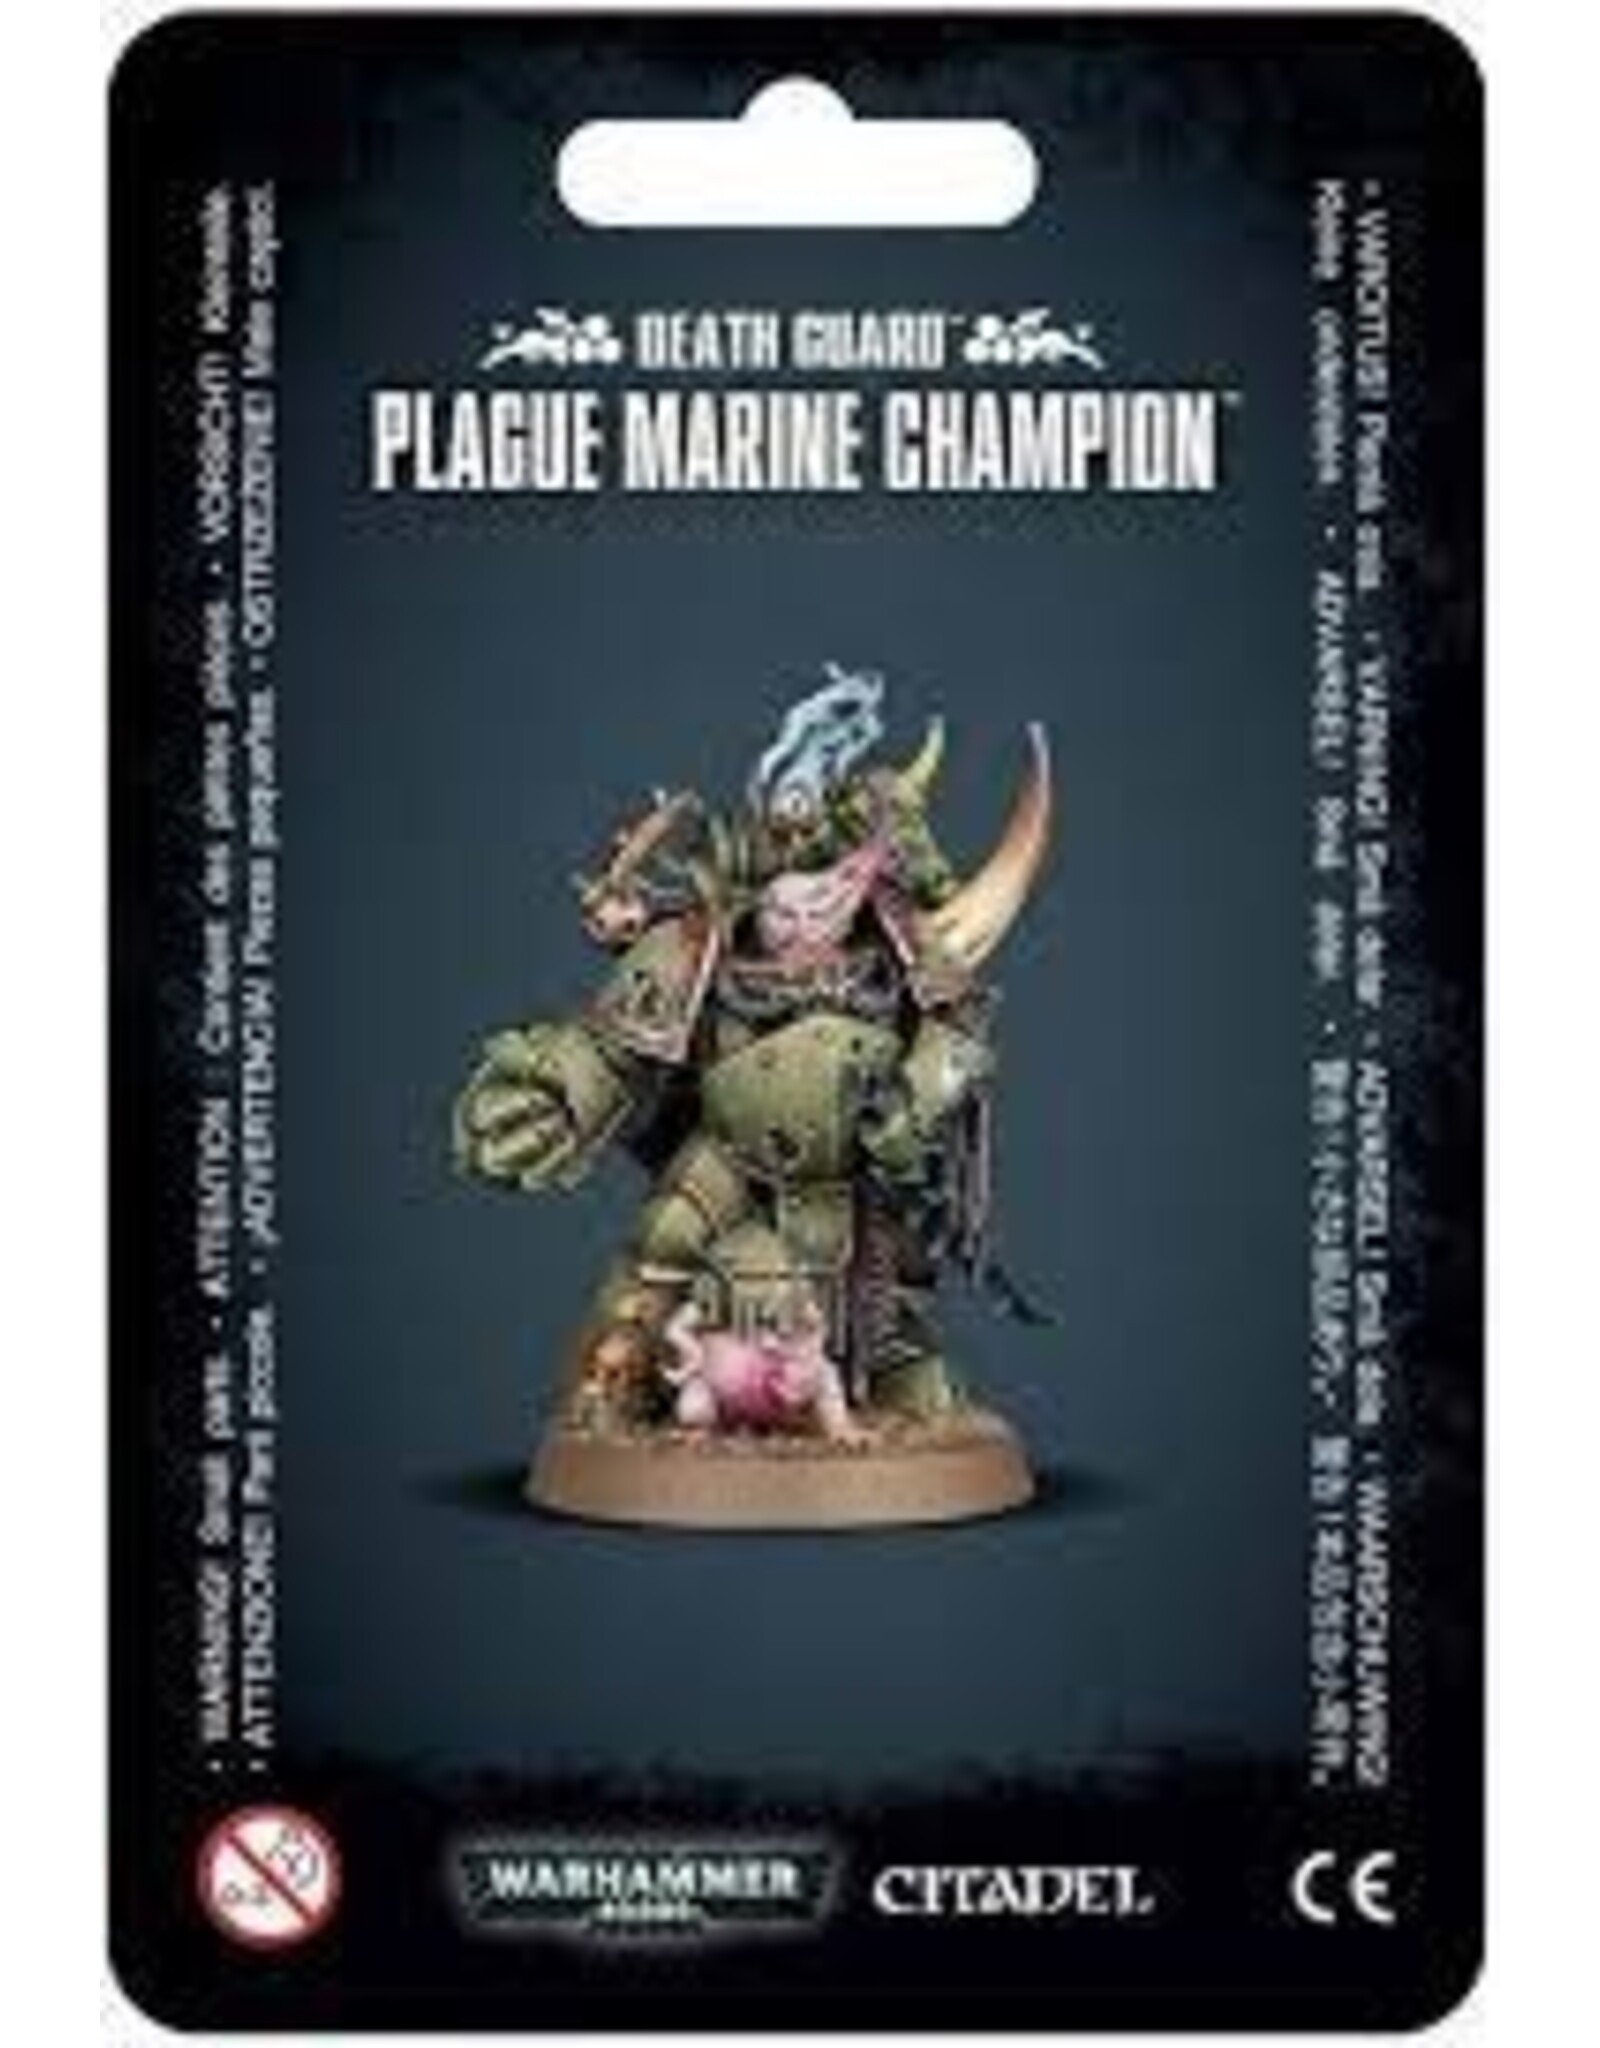 Warhammer 40K Death Guard Plague Marine Champion